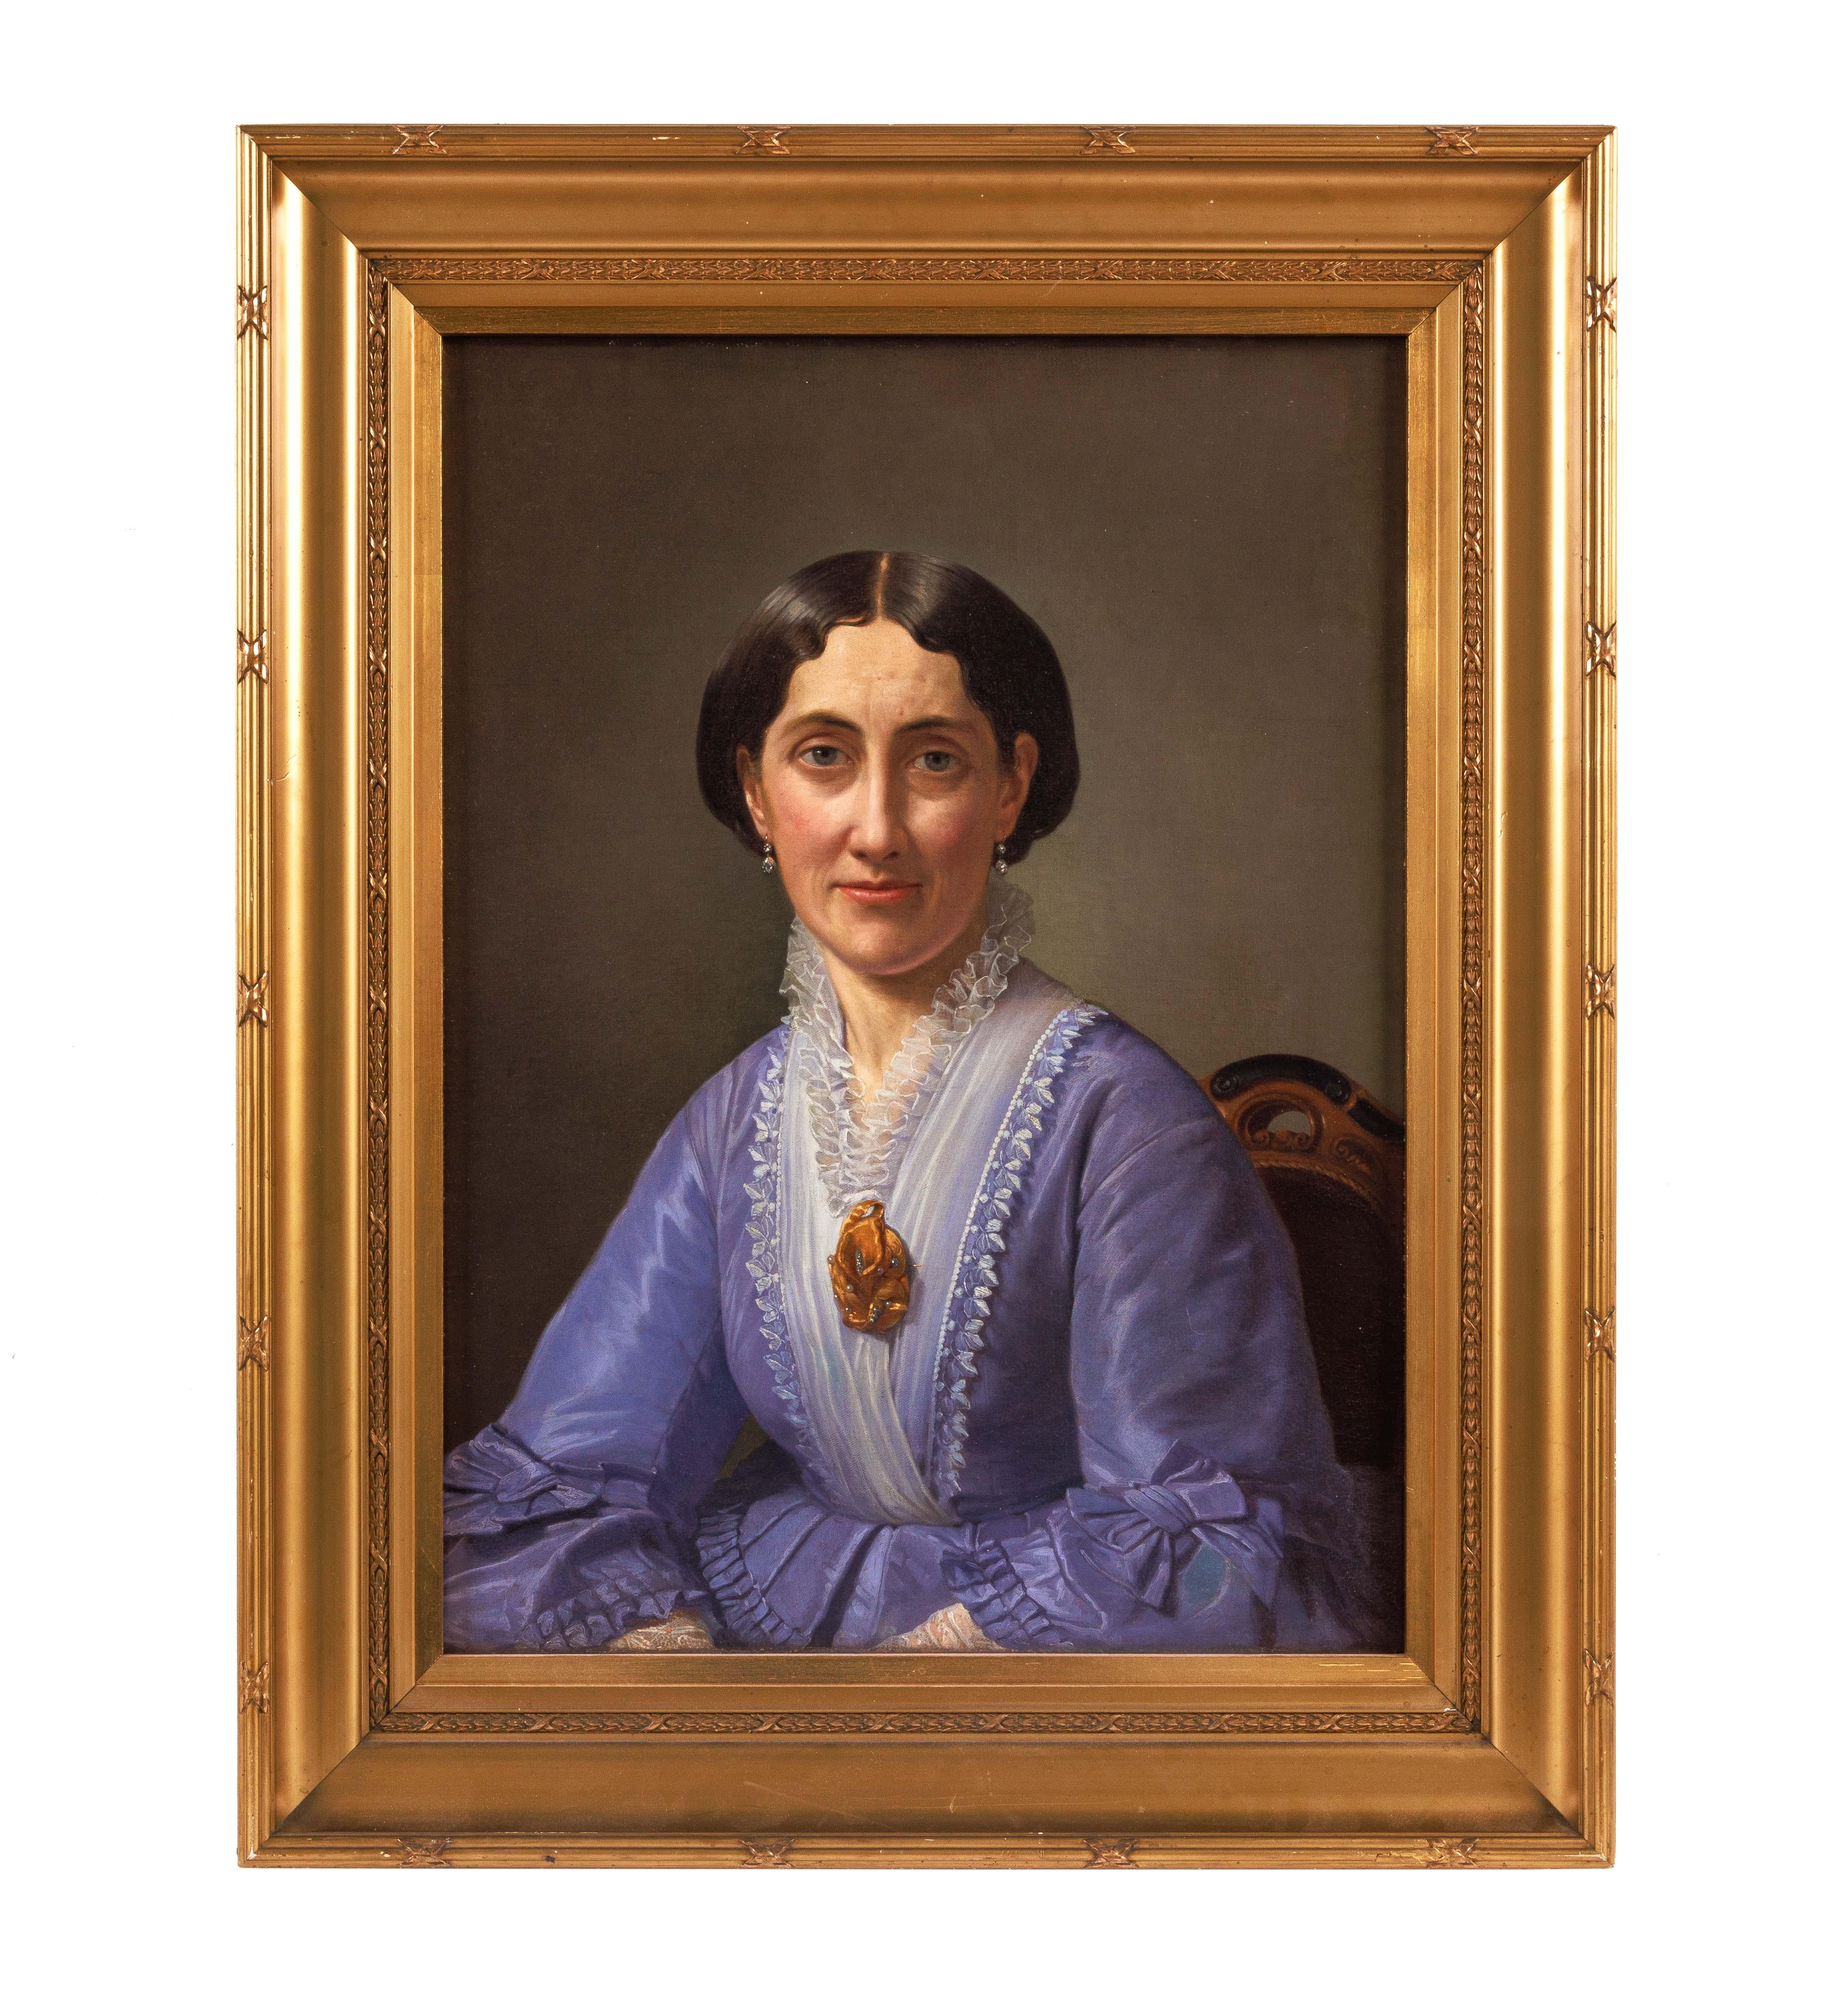 (European School, C. 1825) An Exceptional Quality Portrait "Lady in Purple"